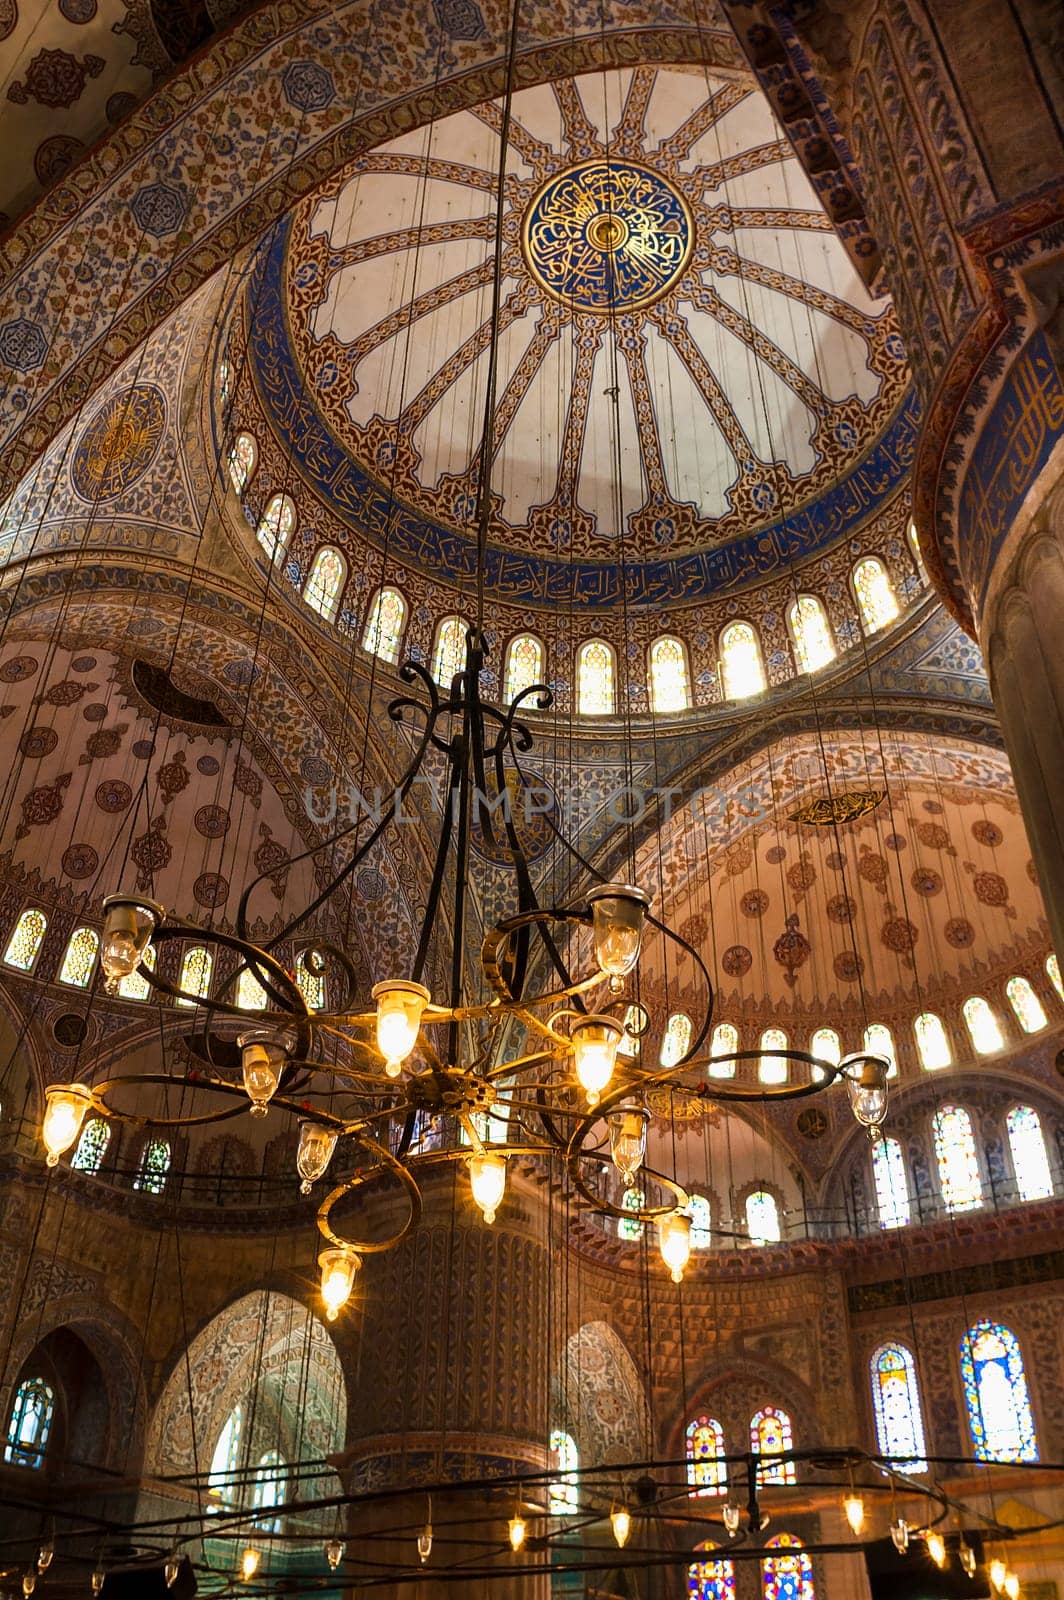 08/19/2012 ISTANBUL, TURKEY - Sultan Ahmet Camii, the Blue Mosque in Istanbul, Turkey